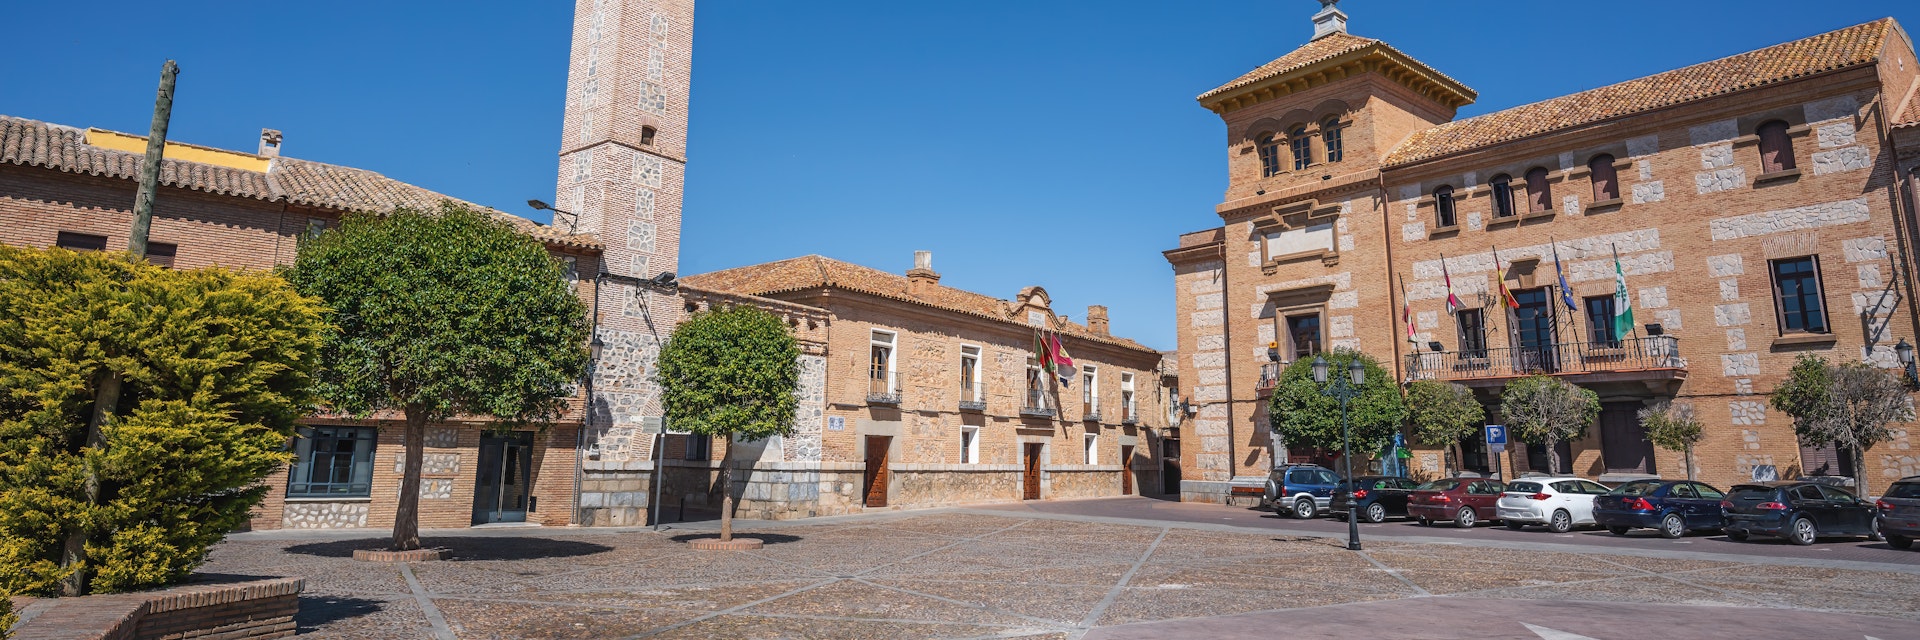 Plaza de Espana Square with Clock Tower (Torre del Reloj) and Consuegra City Hall - Consuegra, Castilla-La Mancha, Spain.